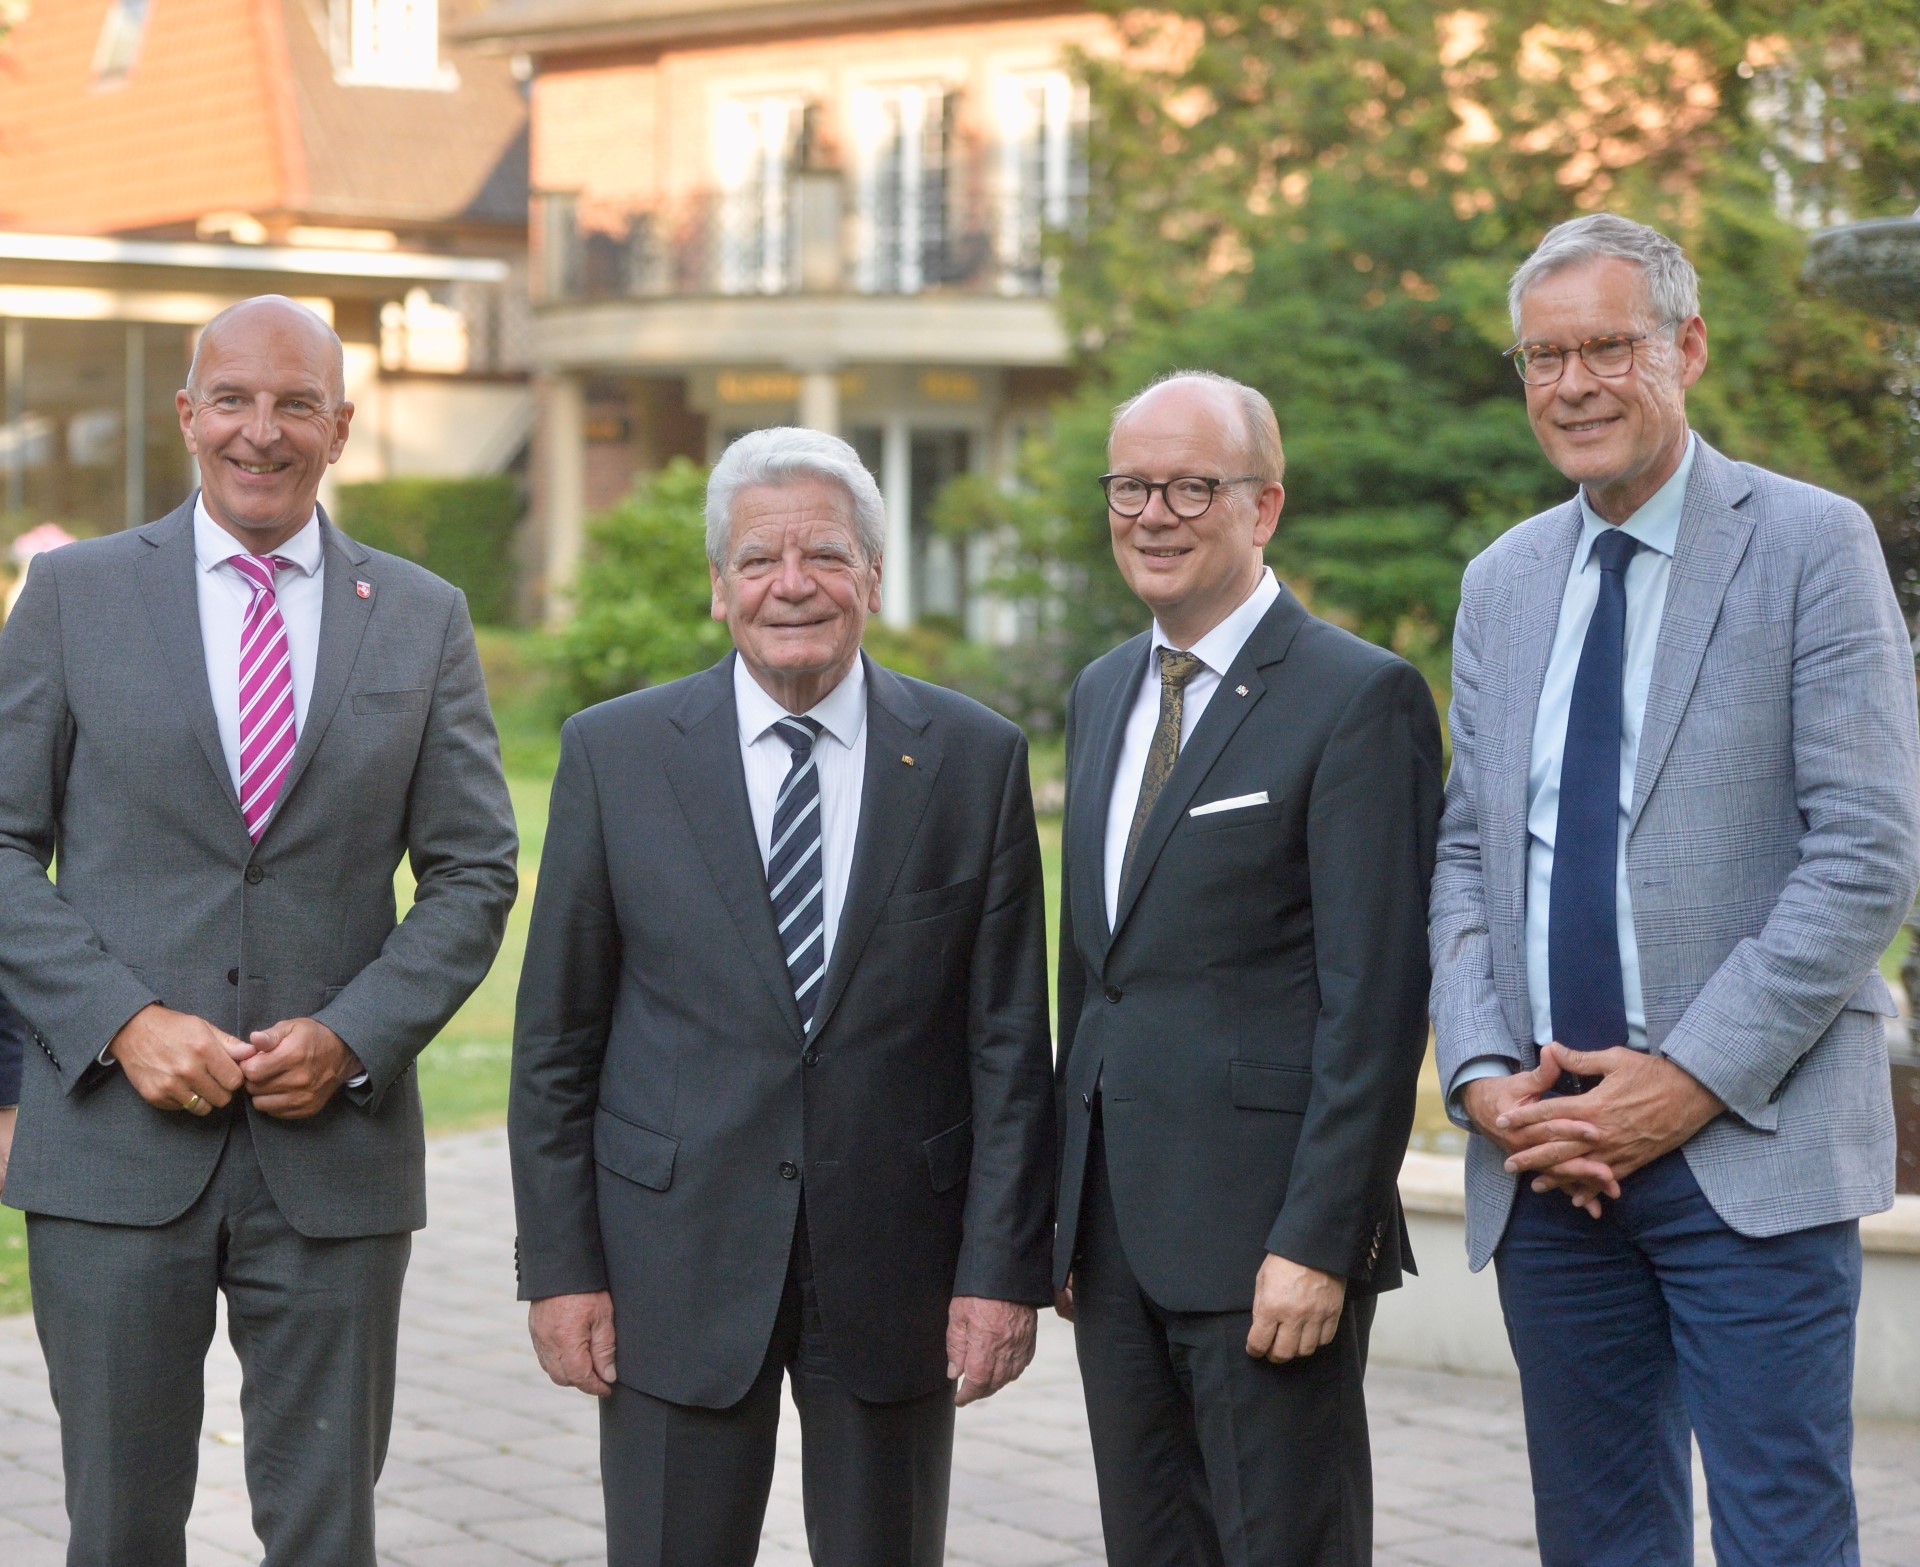 Dr. Georg Lunemann, LWL-Direktor, NRW-Landtagspräsident André Kuper, Landrat Sven-Georg Adenauer und Bundespräsident a.D. Joachim Gauck